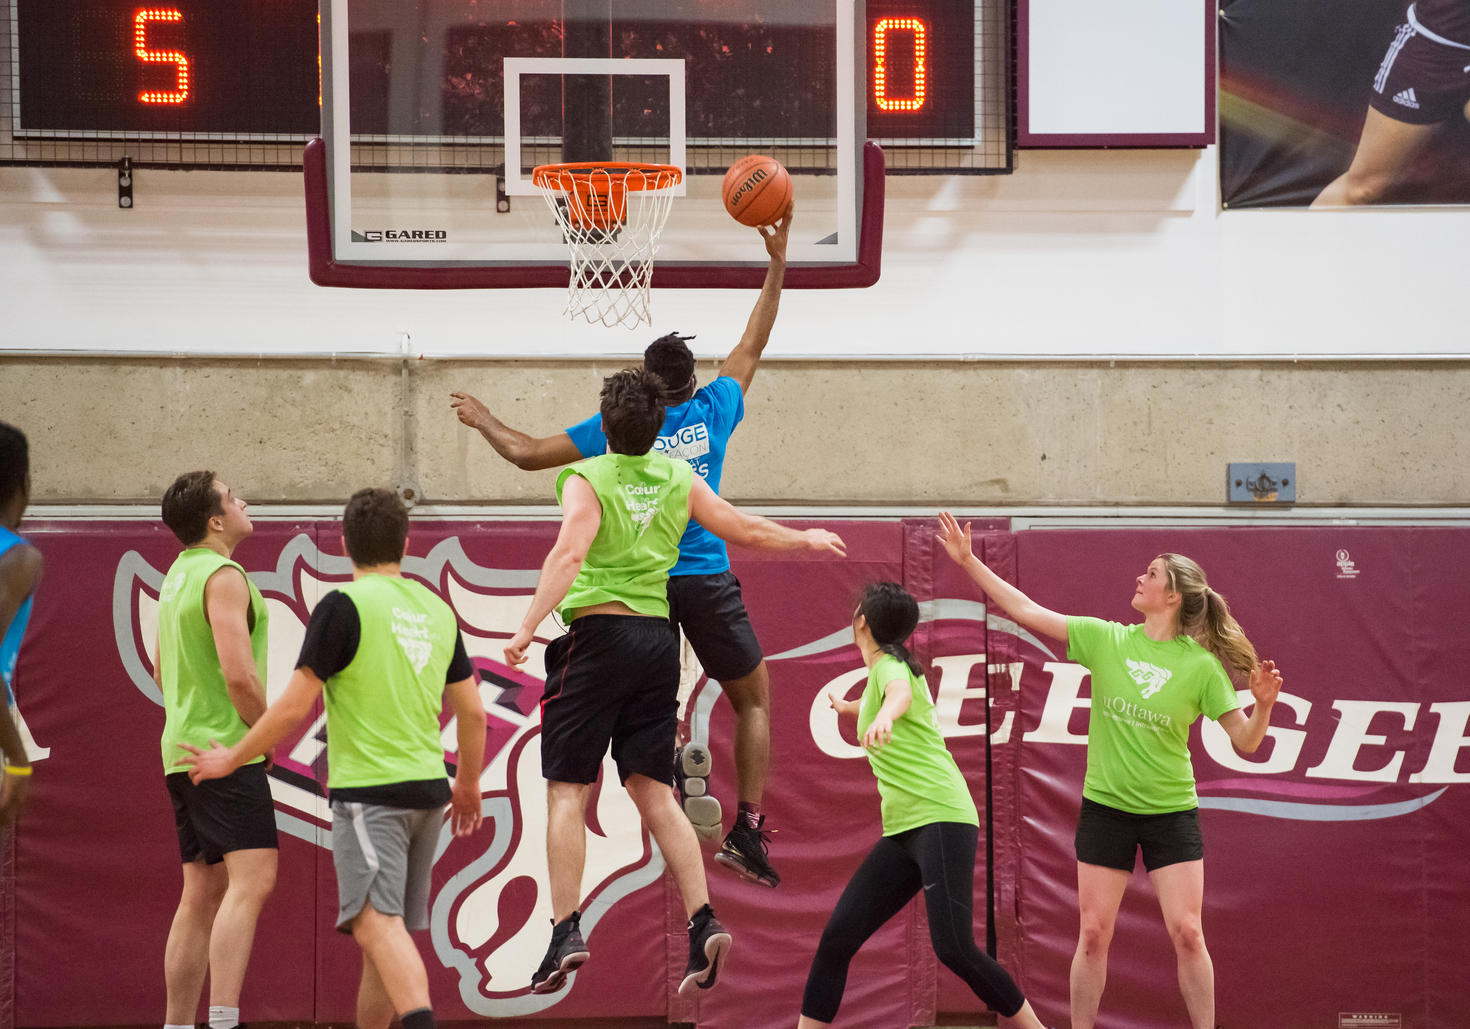 students playing basketball